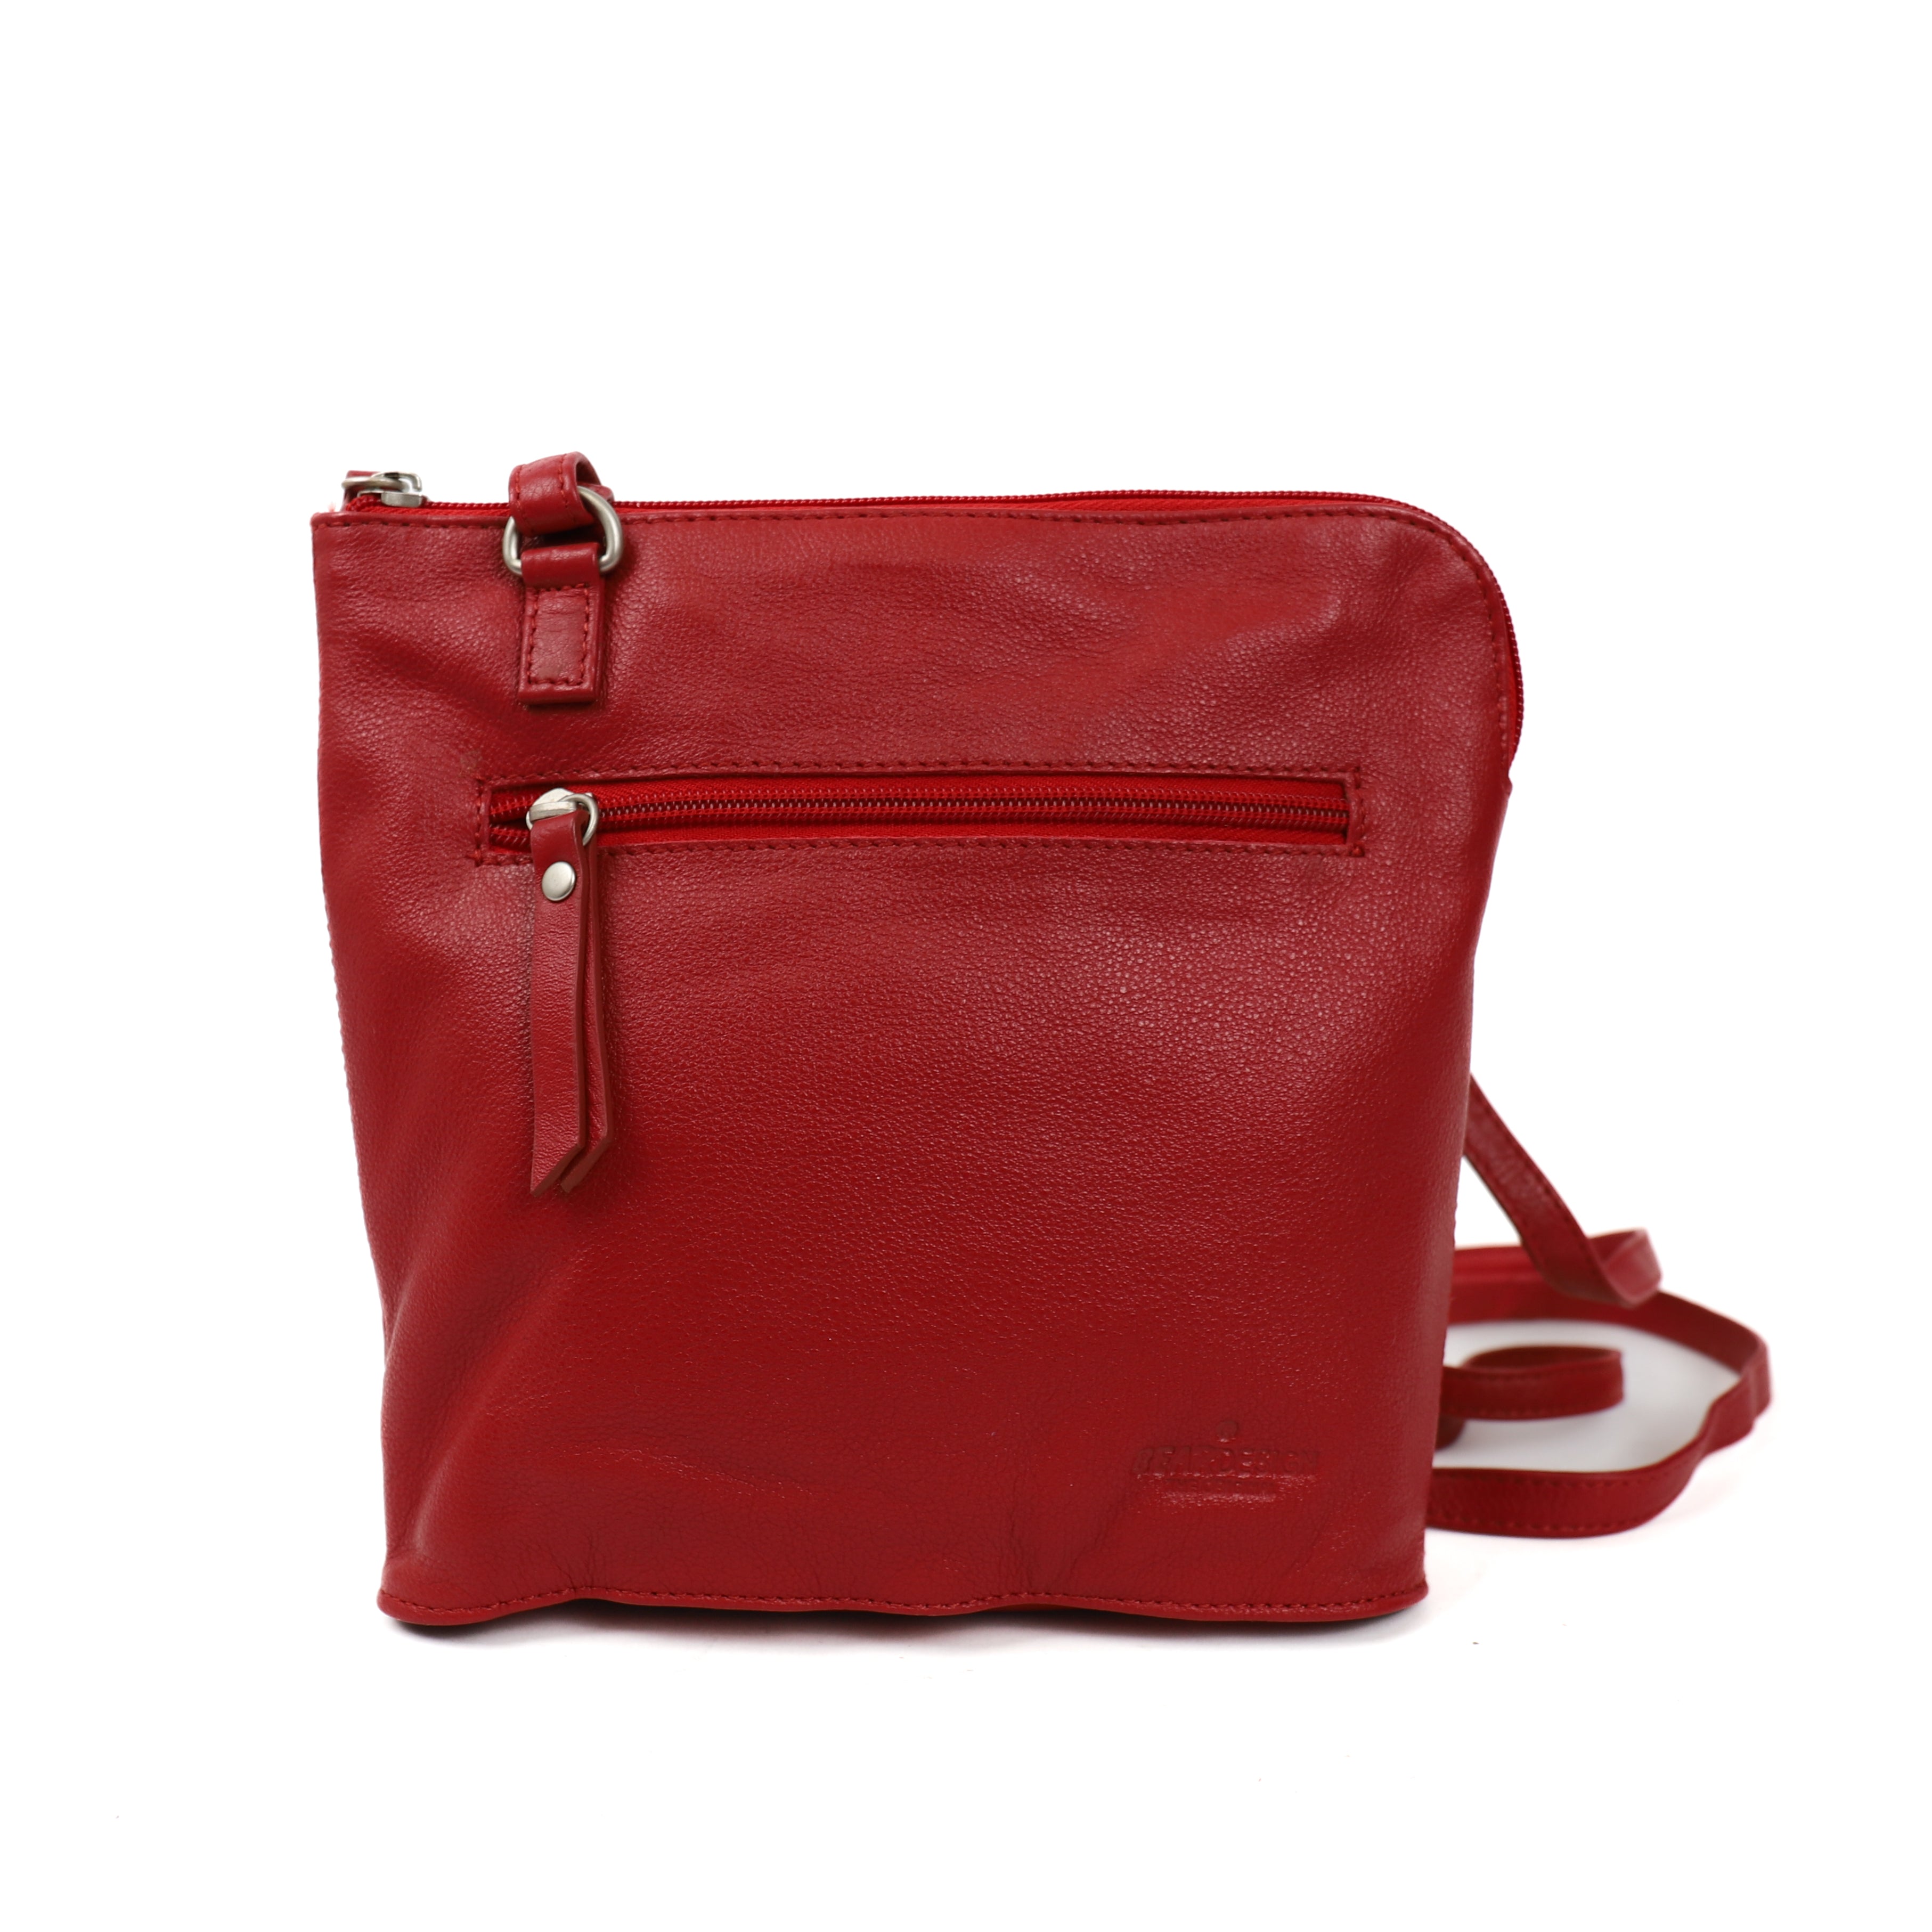 Small shoulder bag B 31259 Red